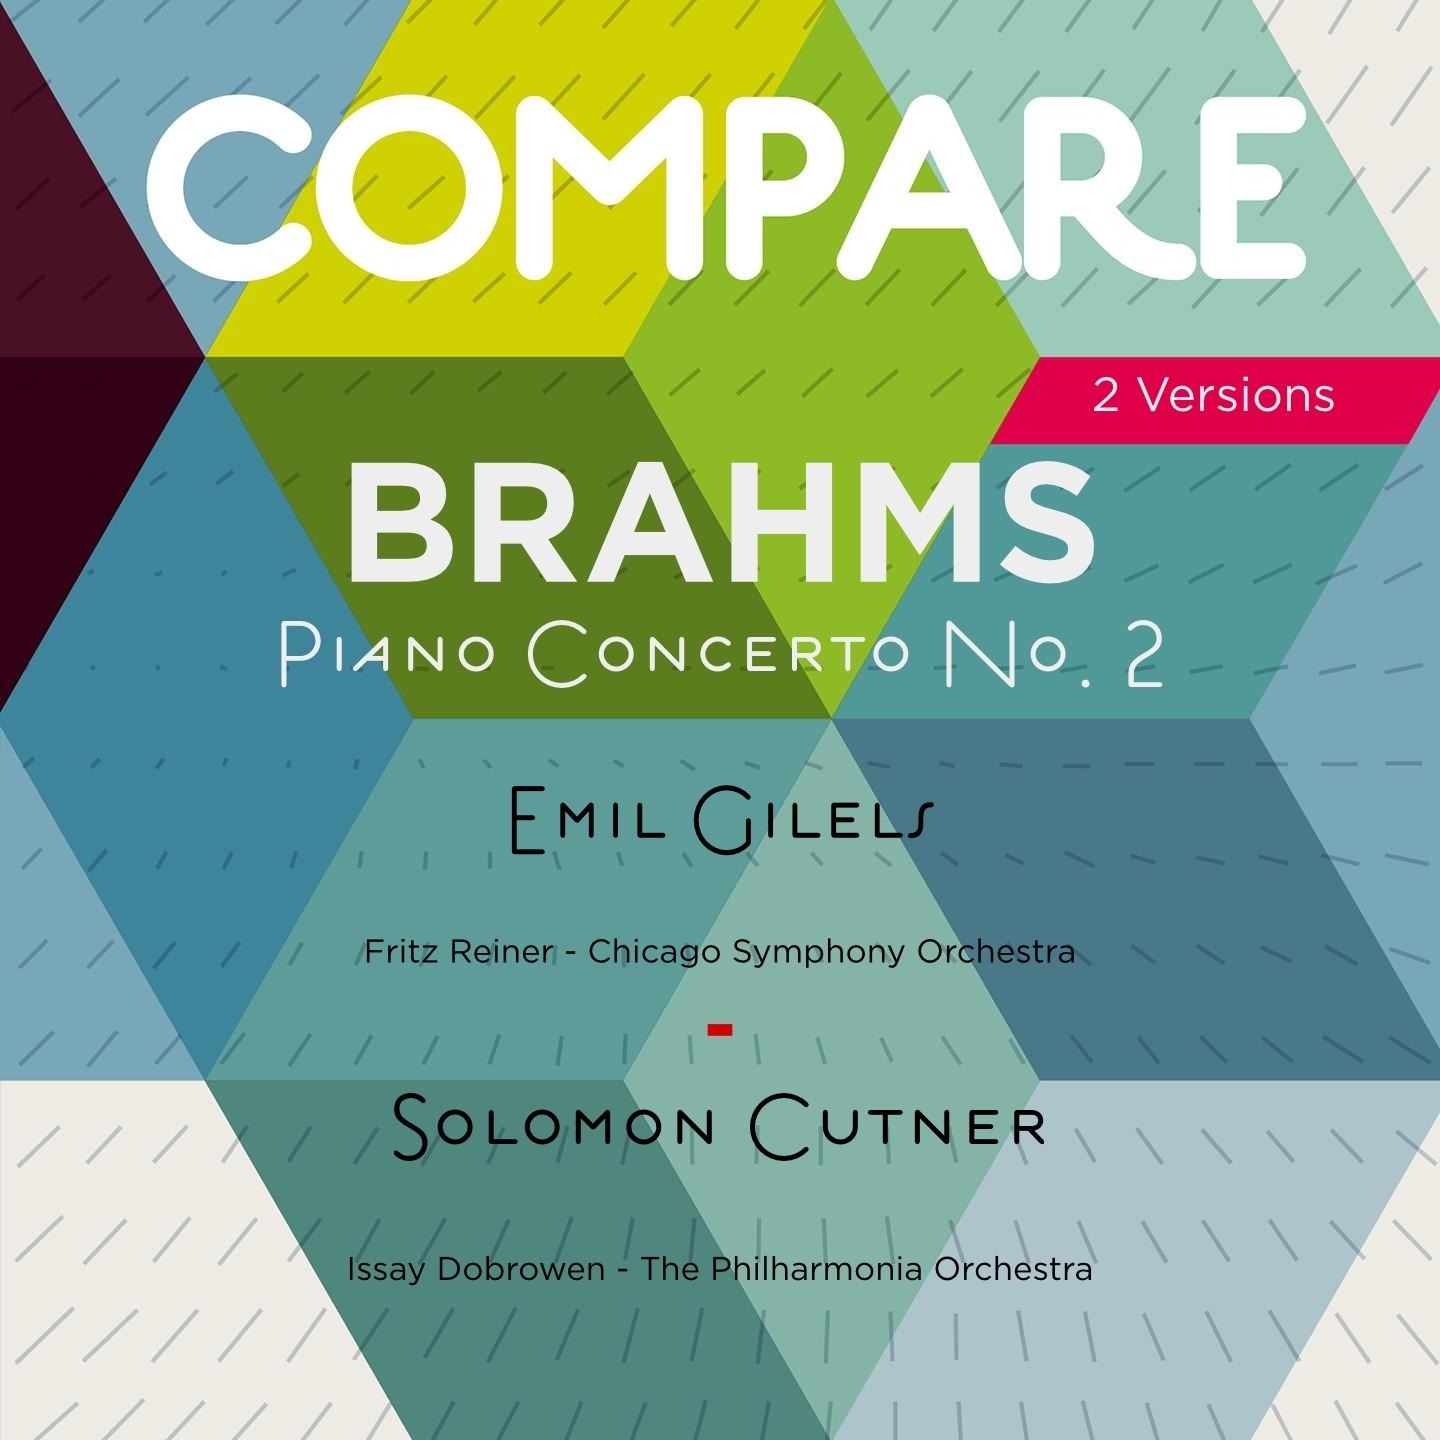 Brahms: Piano Concerto No. 2, Op. 83, Emil Gilels vs. Solomon Cutner